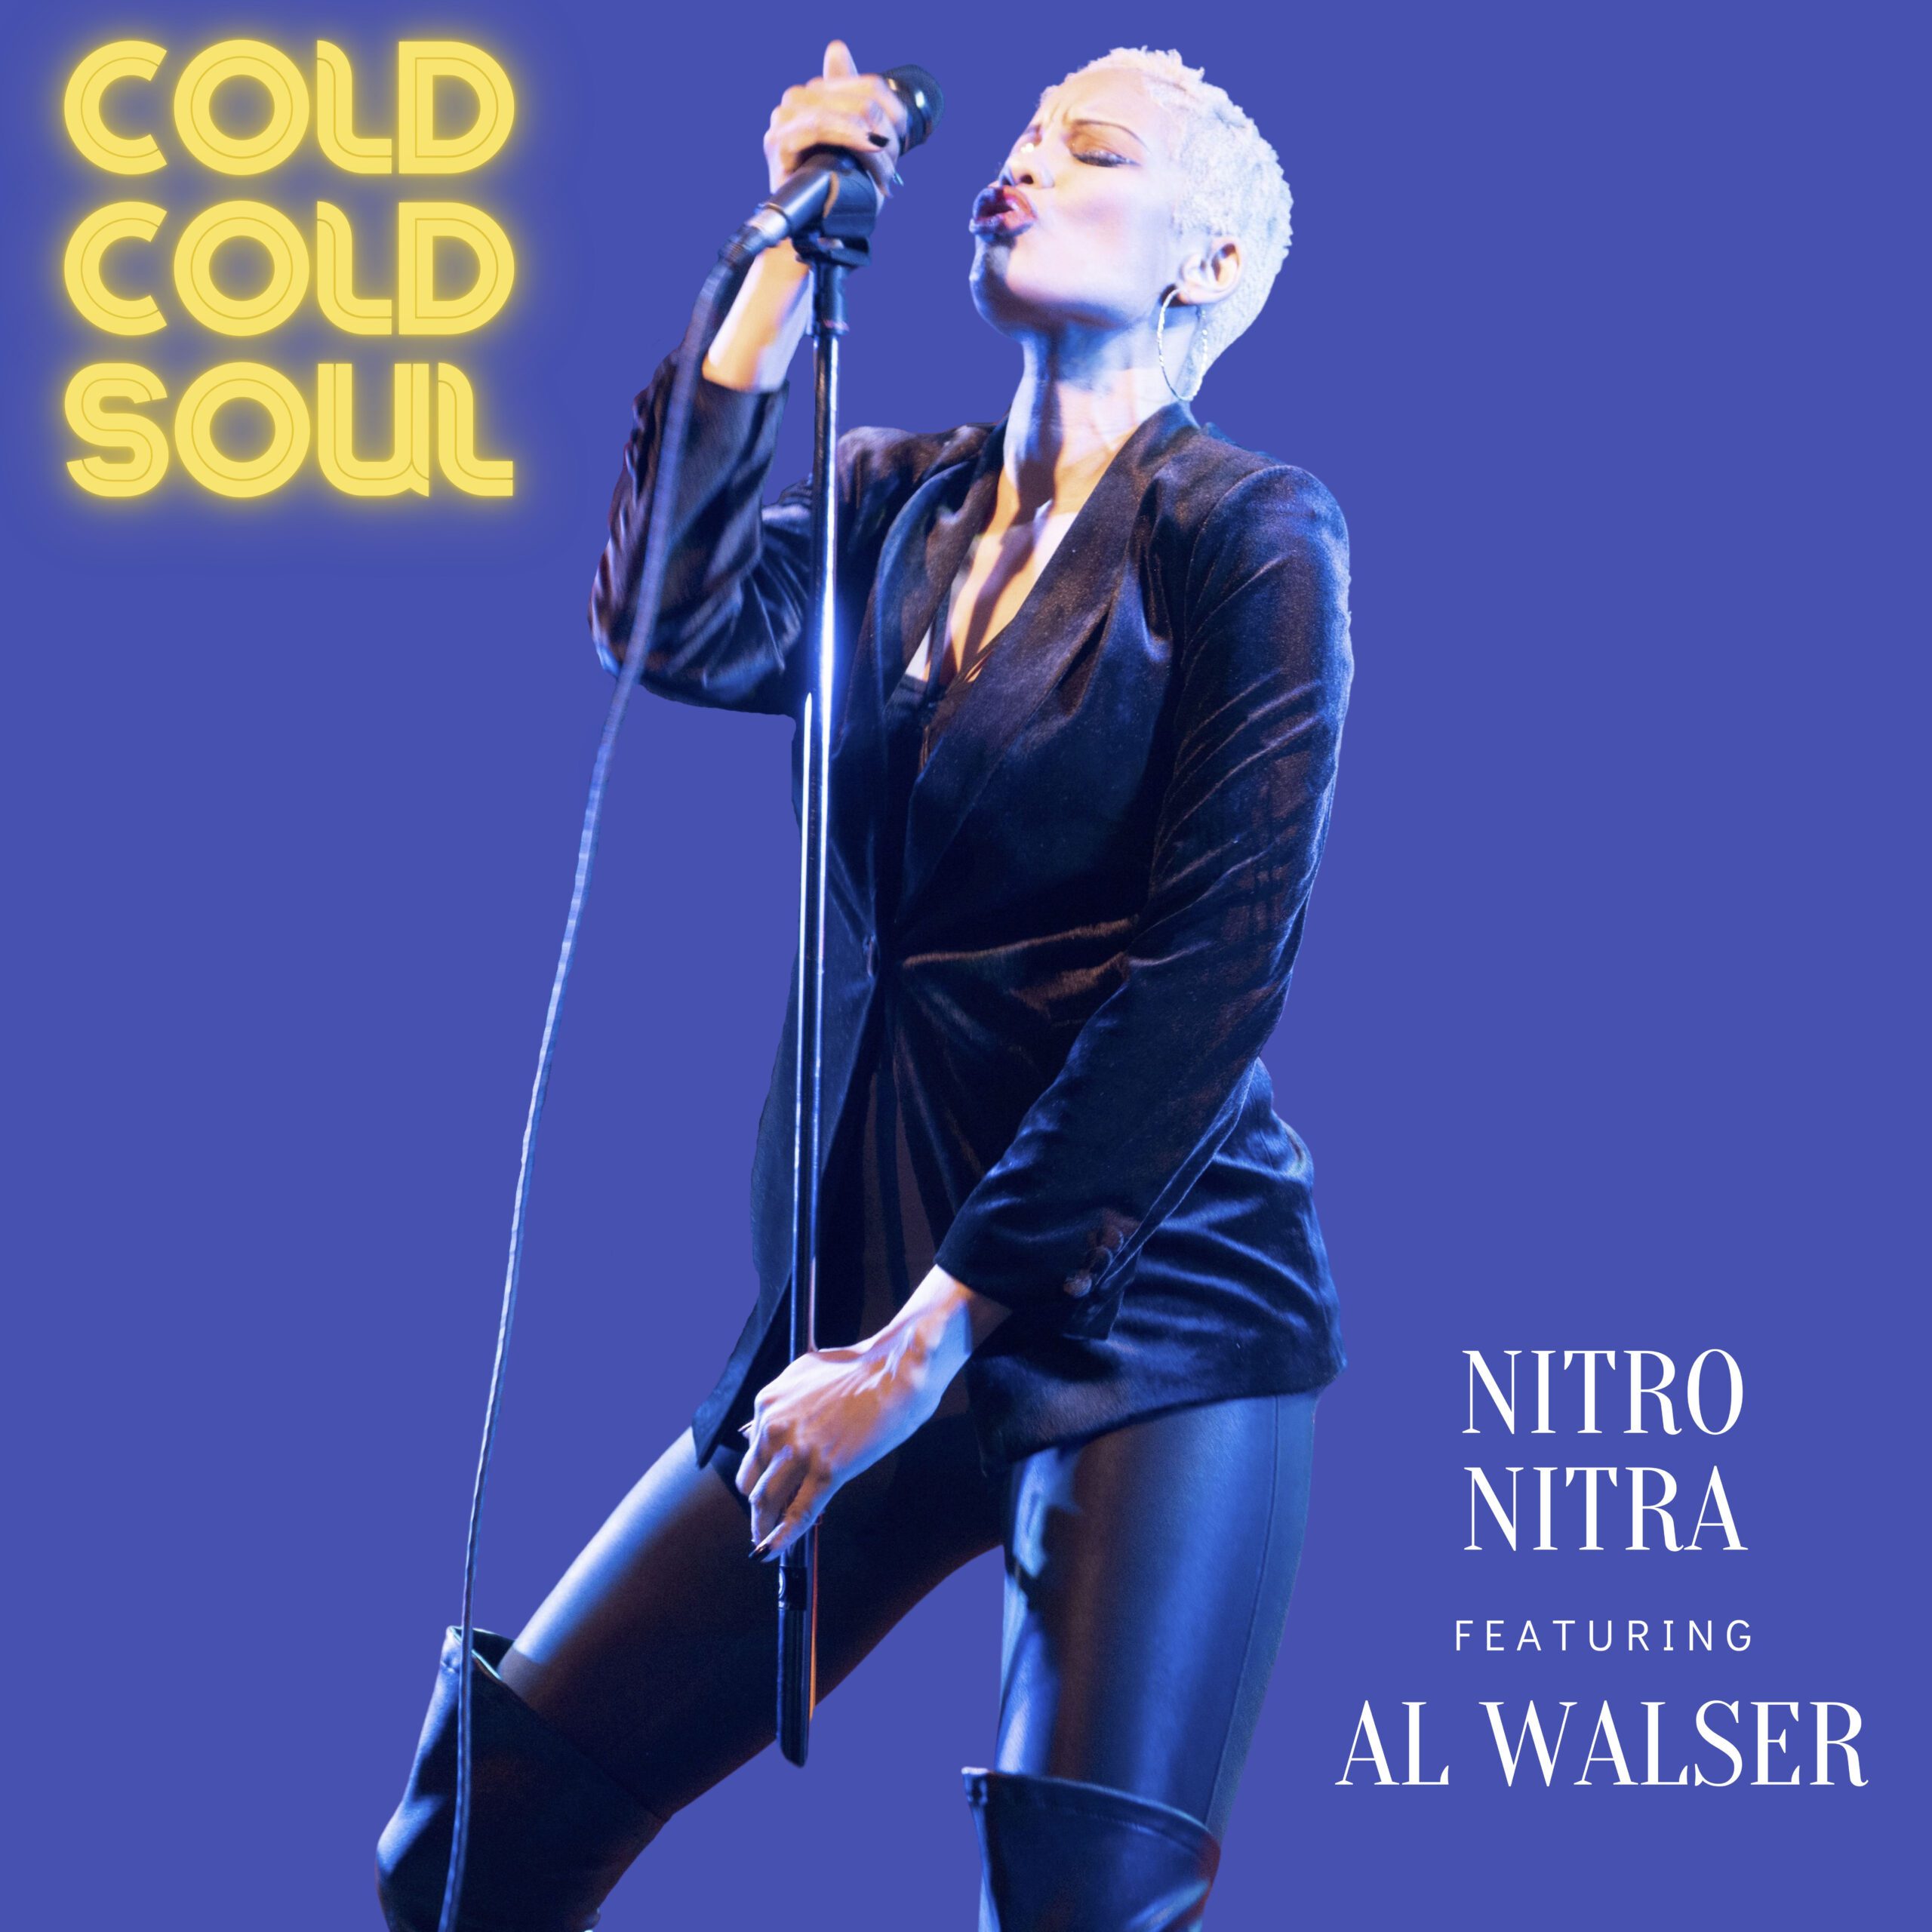 Nitro Nitra feat Al Walser – Cold Cold Soul